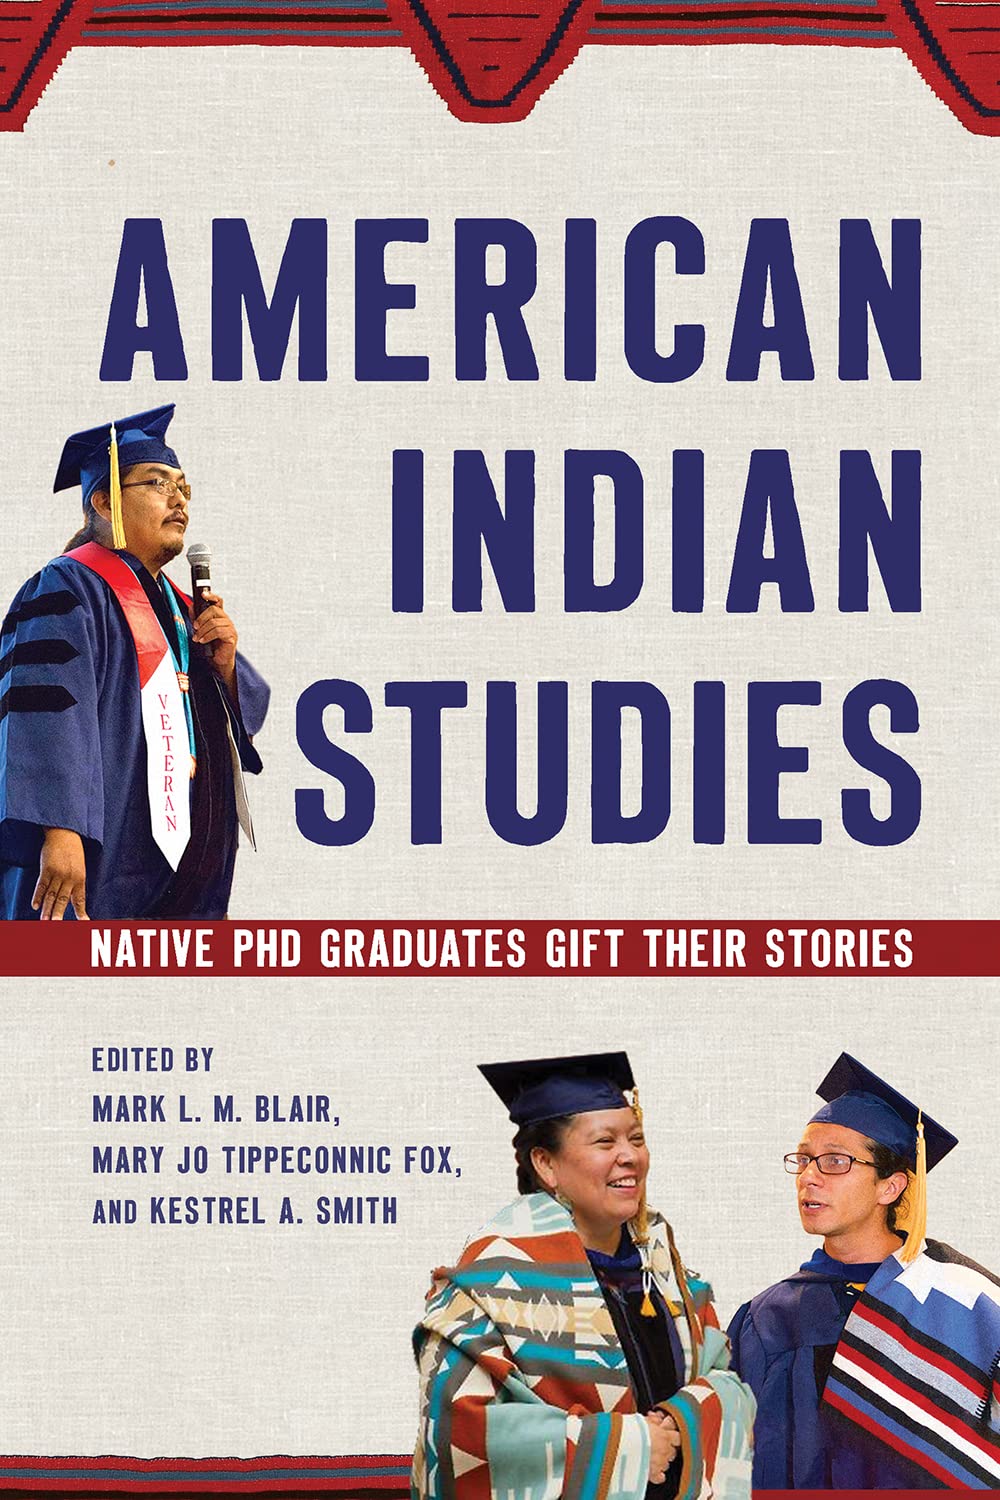 American Indian Studies: Native PhD Graduates Gift Their Stories edited by Mark L. M. Blair et al.